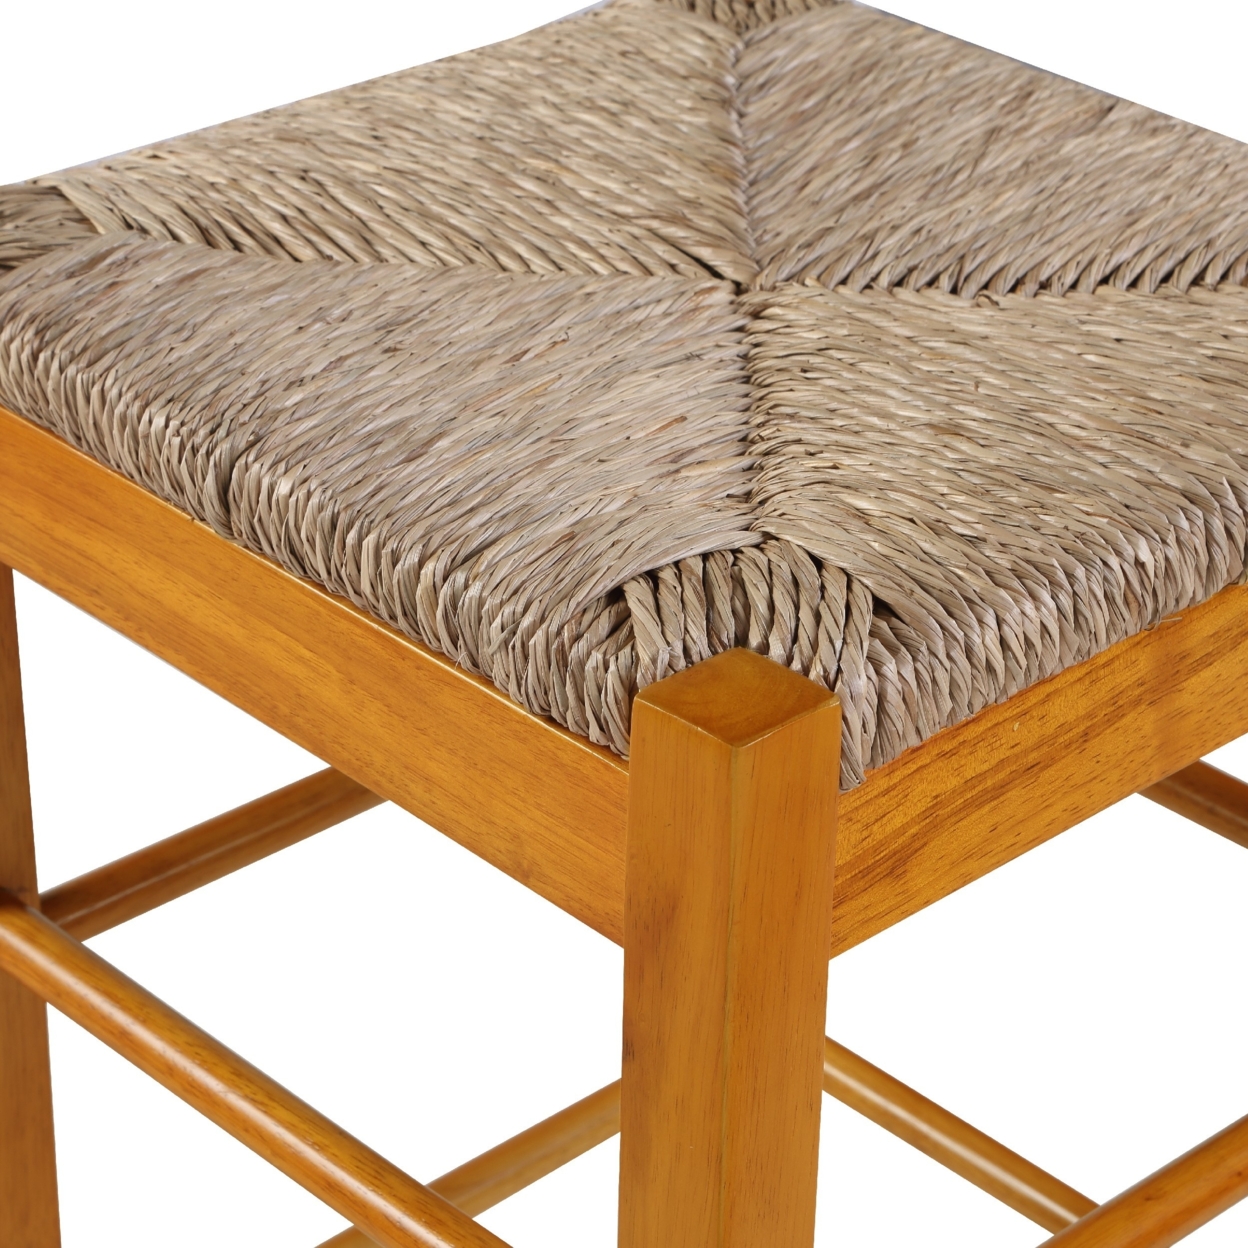 Chris 29 Inch Barstool With Wood Frame, Handwoven Rush Seat, Oak Brown- Saltoro Sherpi